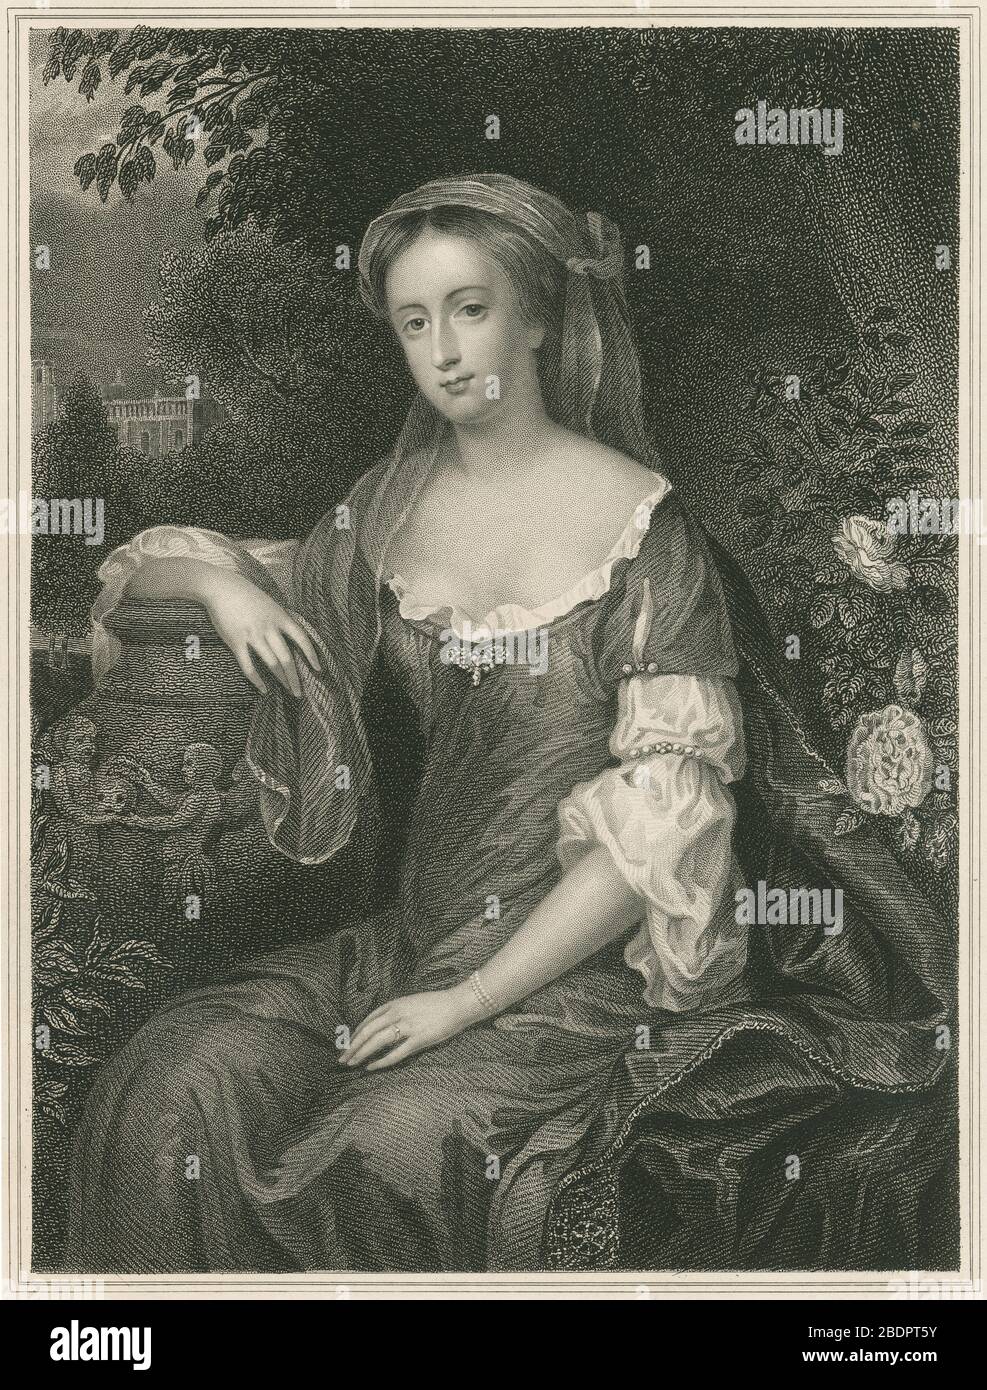 Antique engraving, Emilia Butler, Countess of Ossory. Emilia Butler, Countess of Ossory (1635-1688), born Emilia van Nassau-Beverweerd, was an Anglo-Dutch courtier. SOURCE: ORIGINAL ENGRAVING Stock Photo